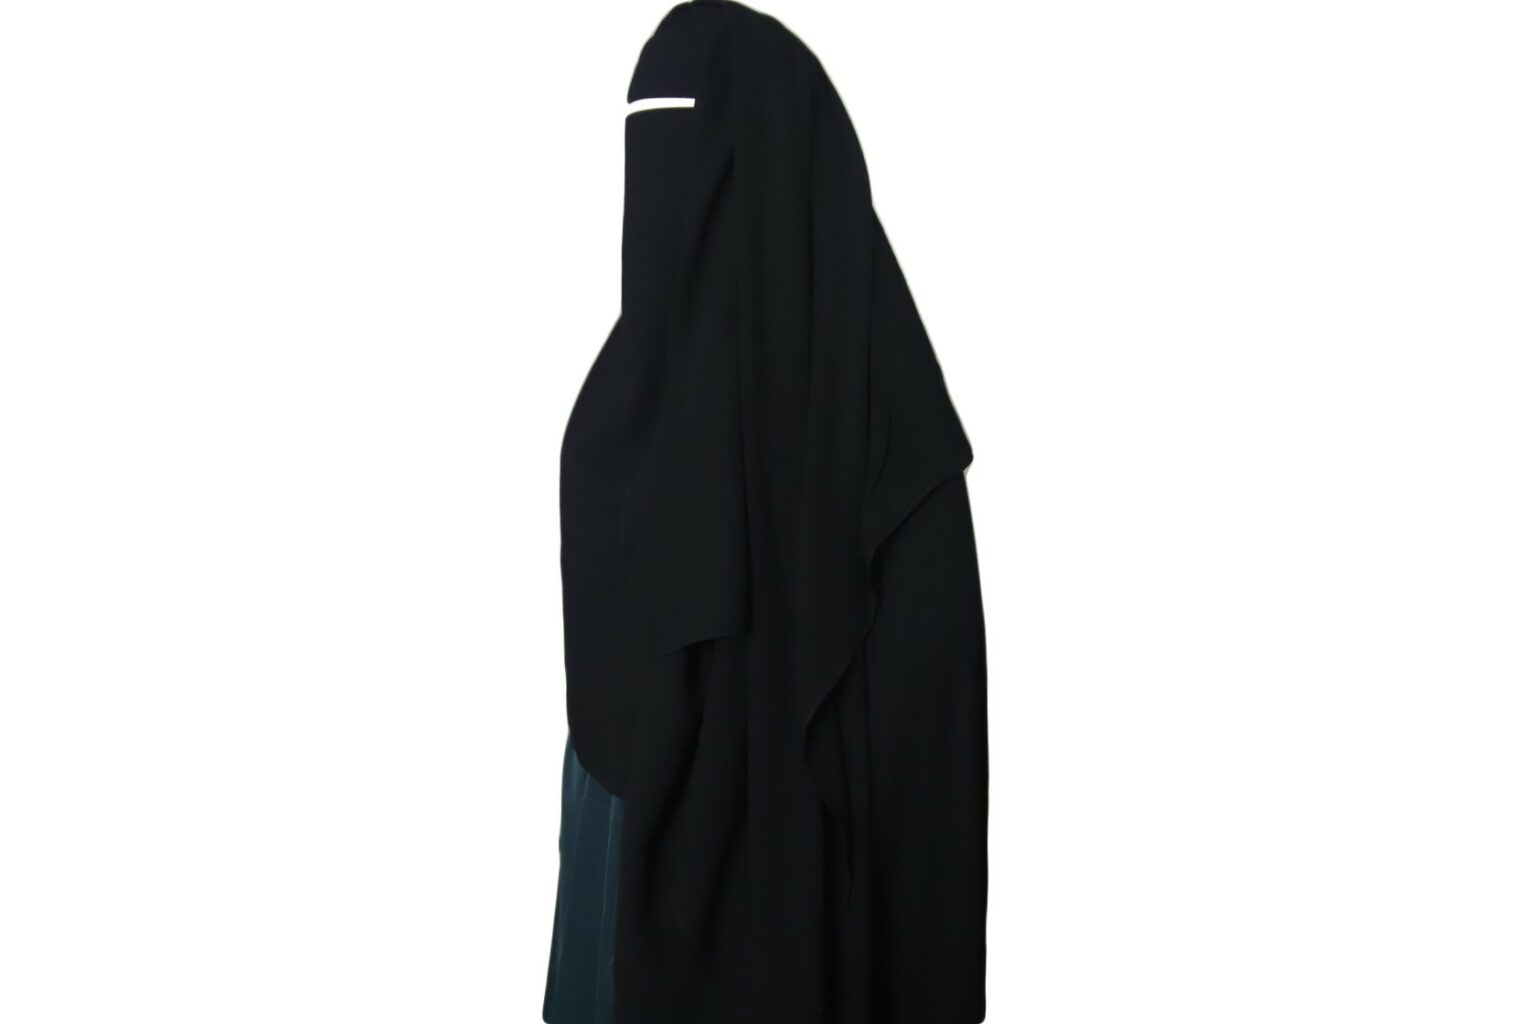 Buy Niqab Online, Shop Niqabs for Muslim Women | Almaas Boutique